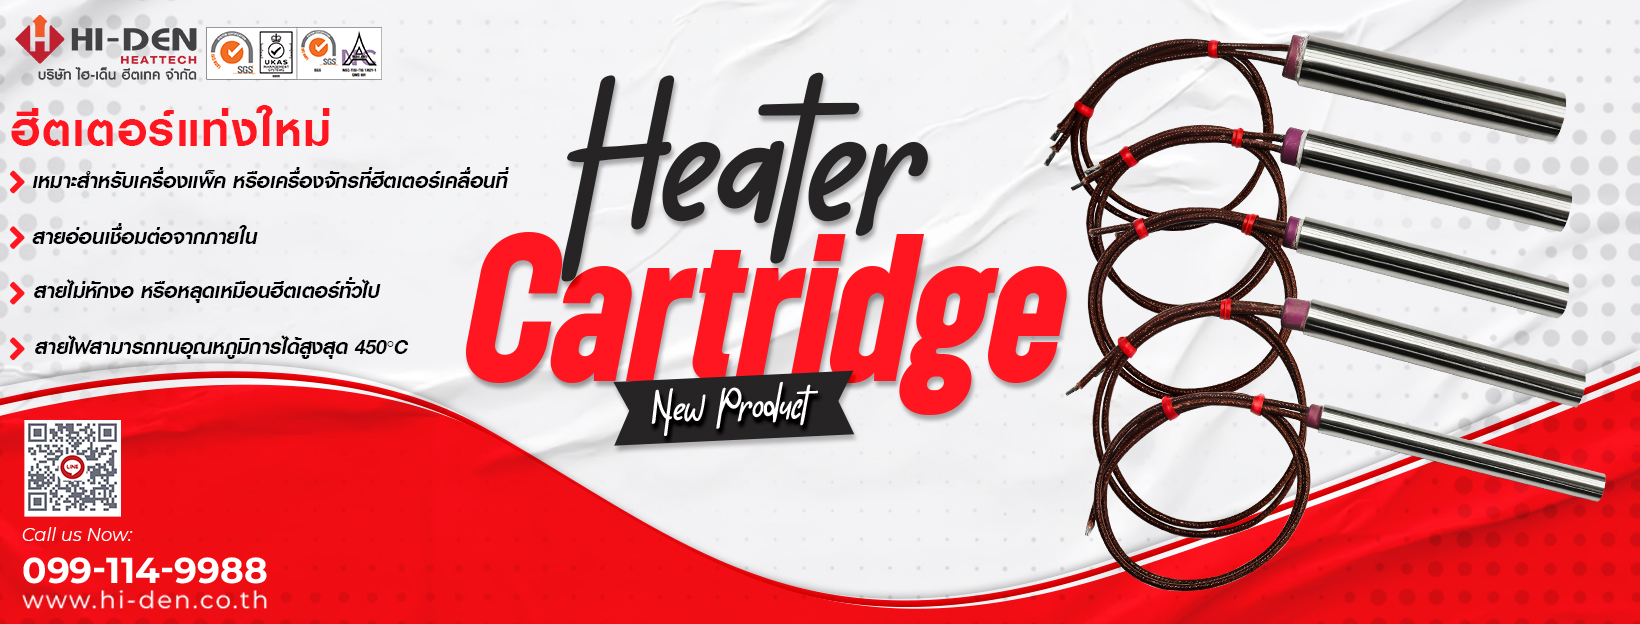 CartridgeHeater New